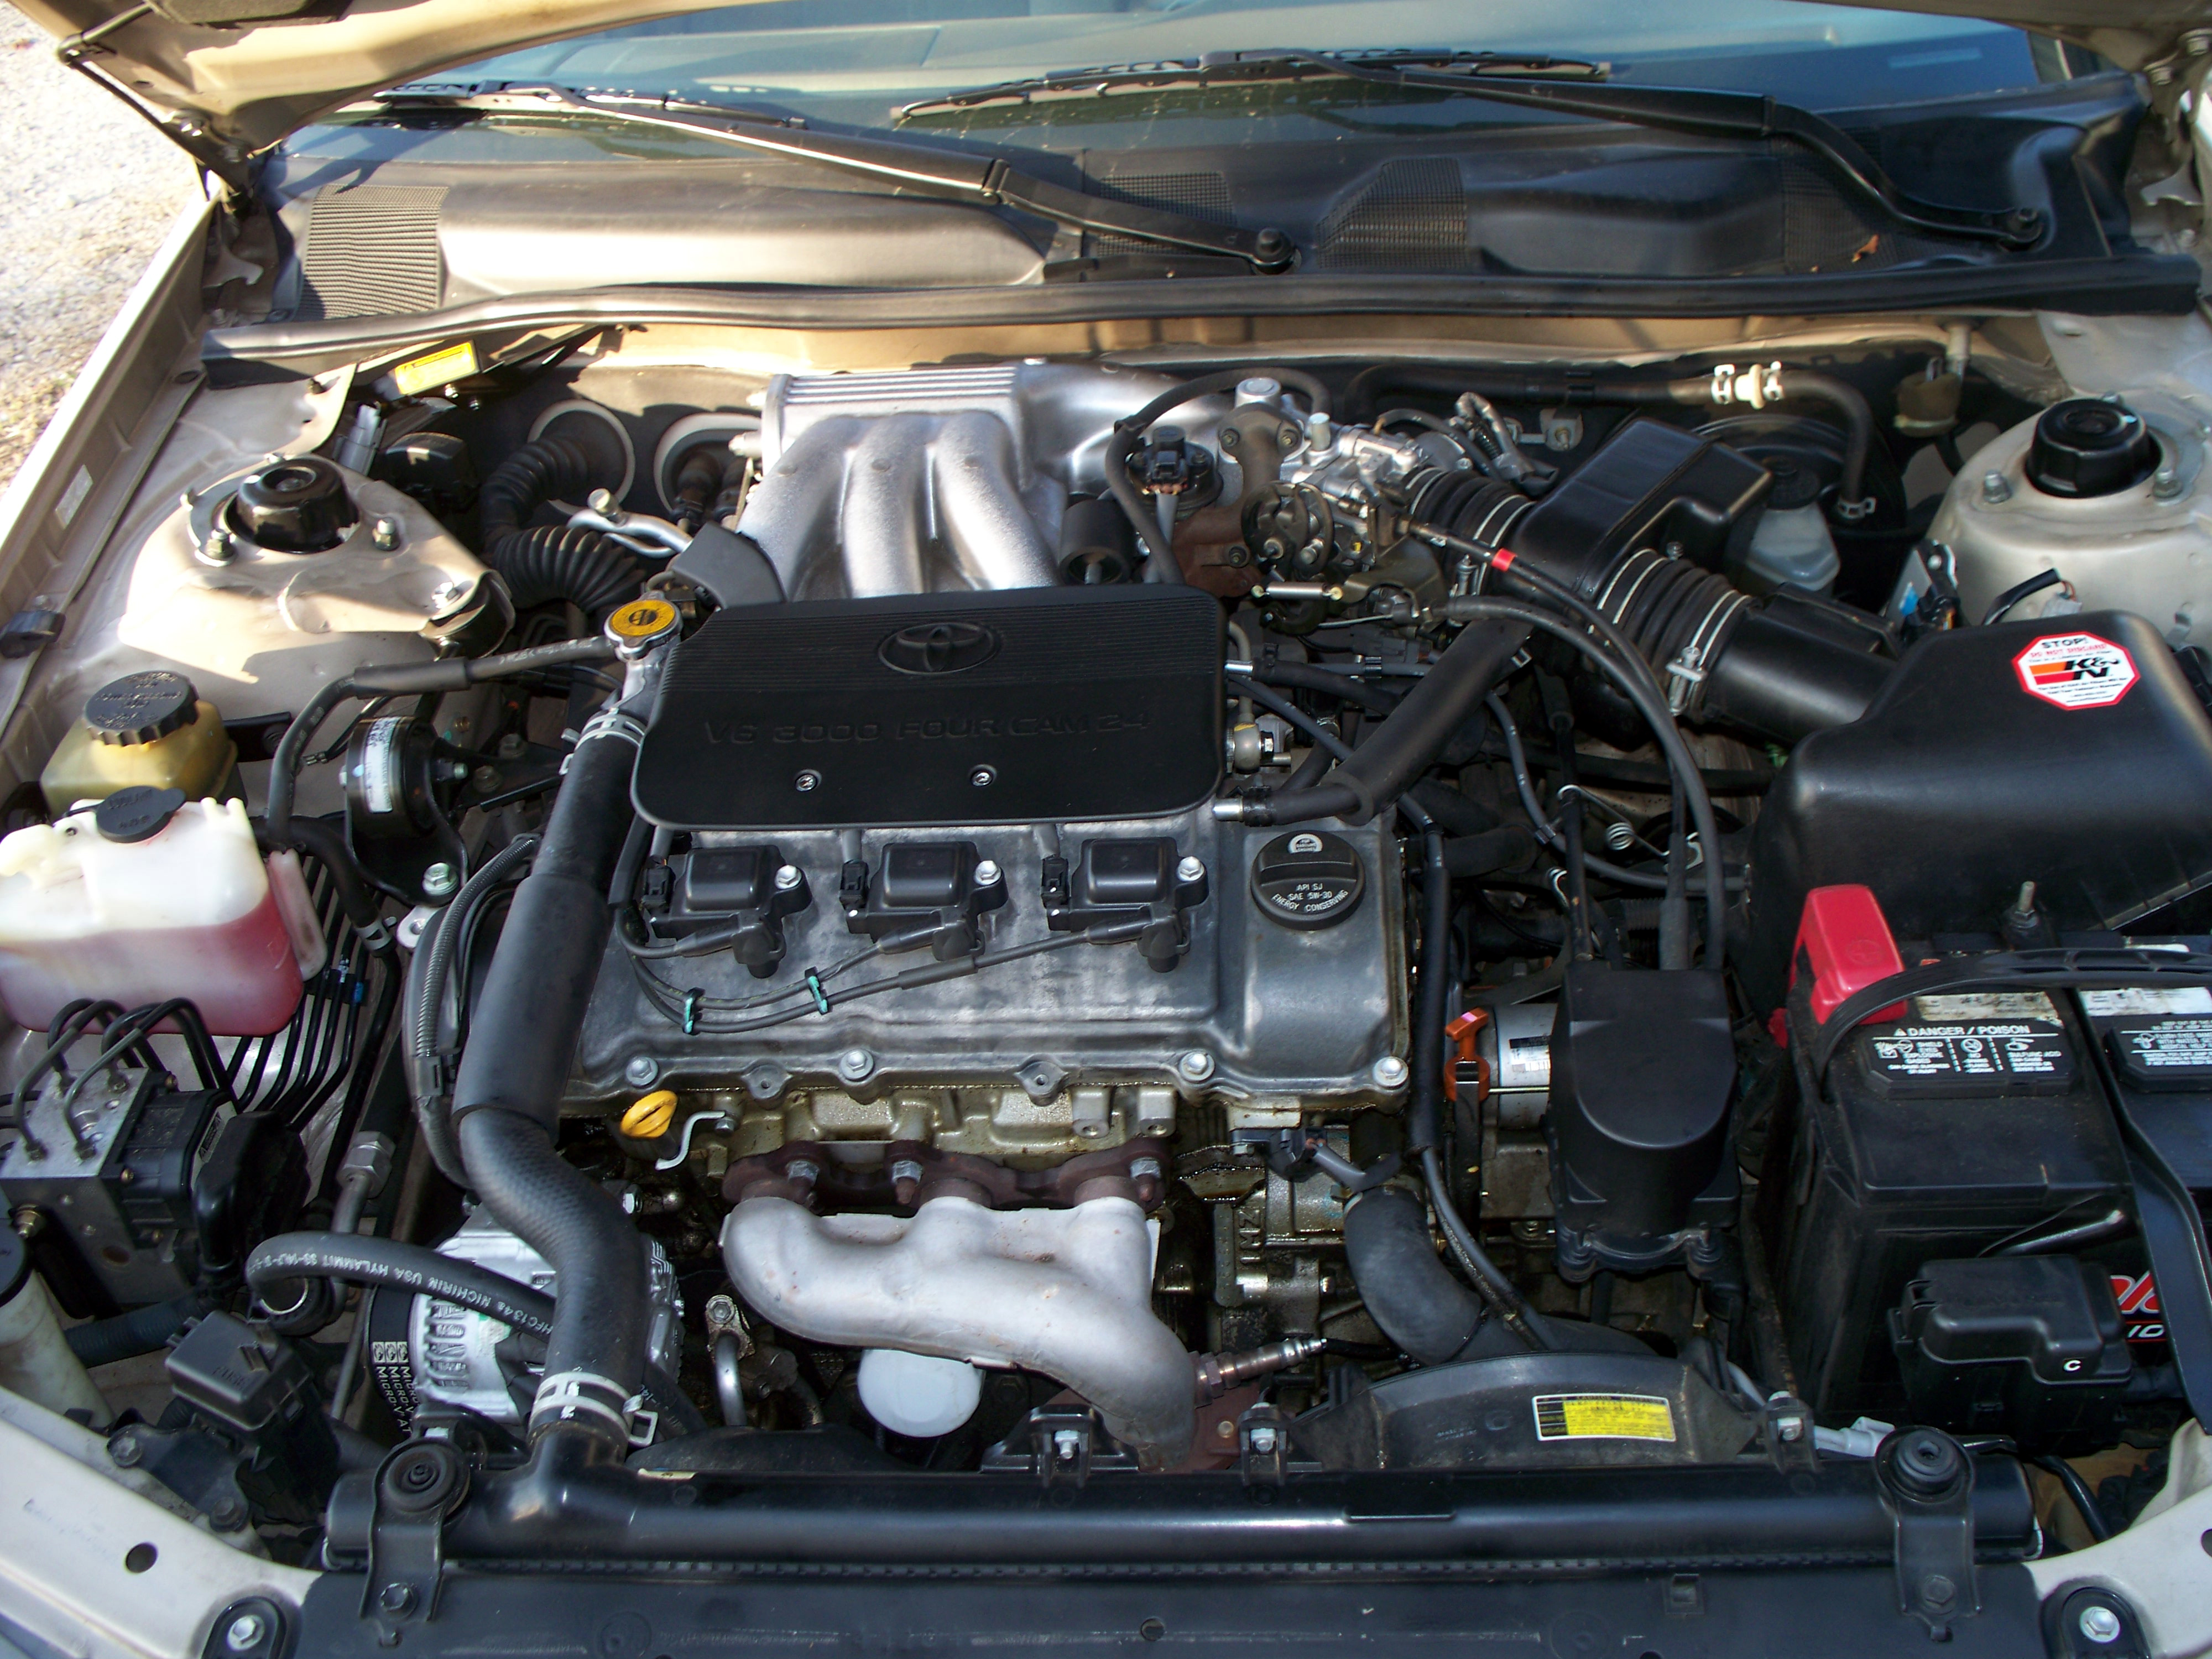 Toyota Camry engine bay 